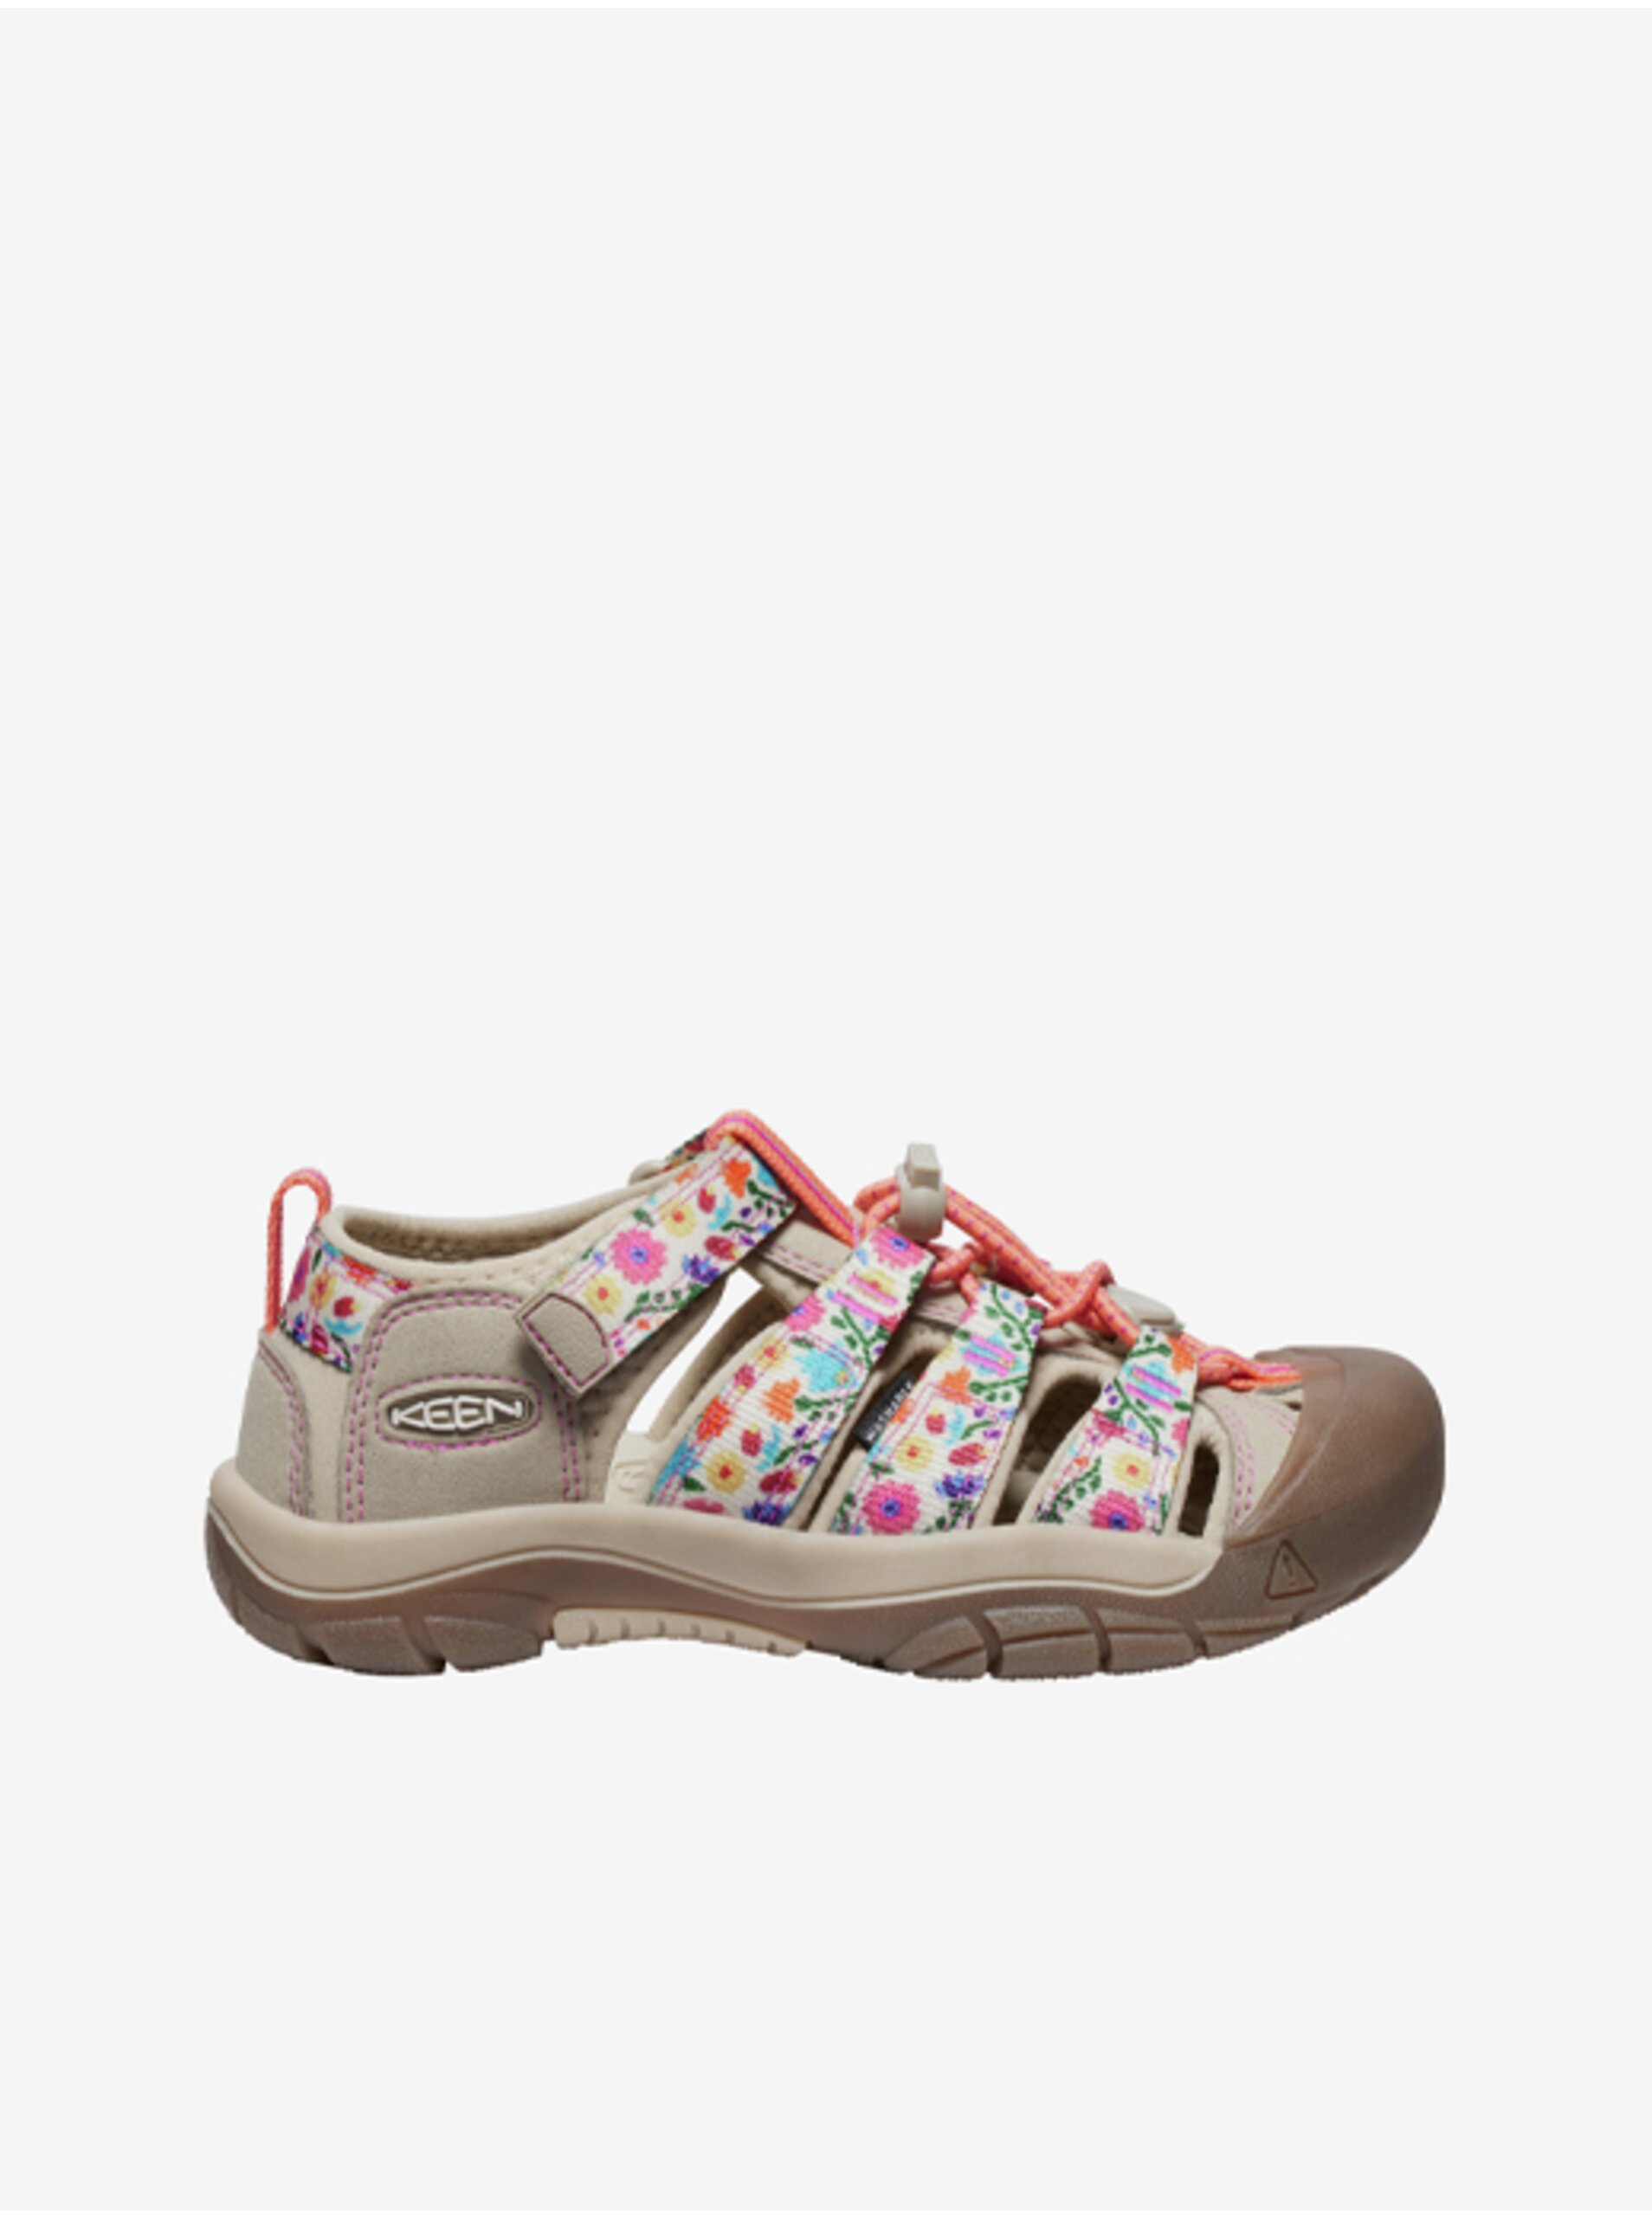 E-shop Béžové holčičí outdoorové sandály Keen Keen Newport H2